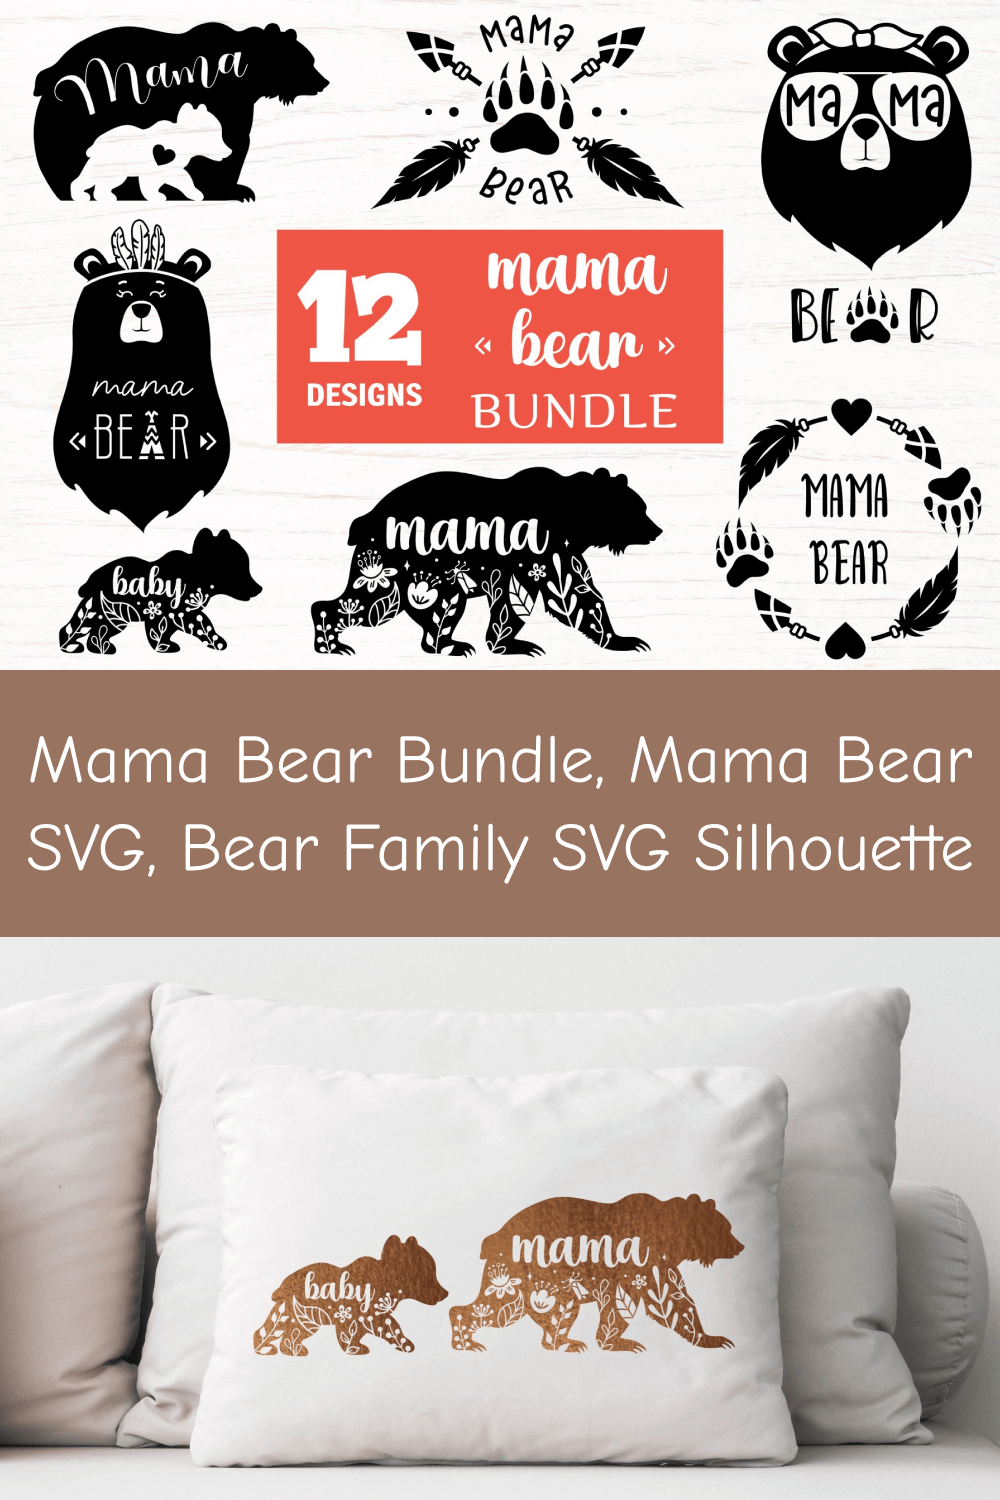 Mama bear bundle.